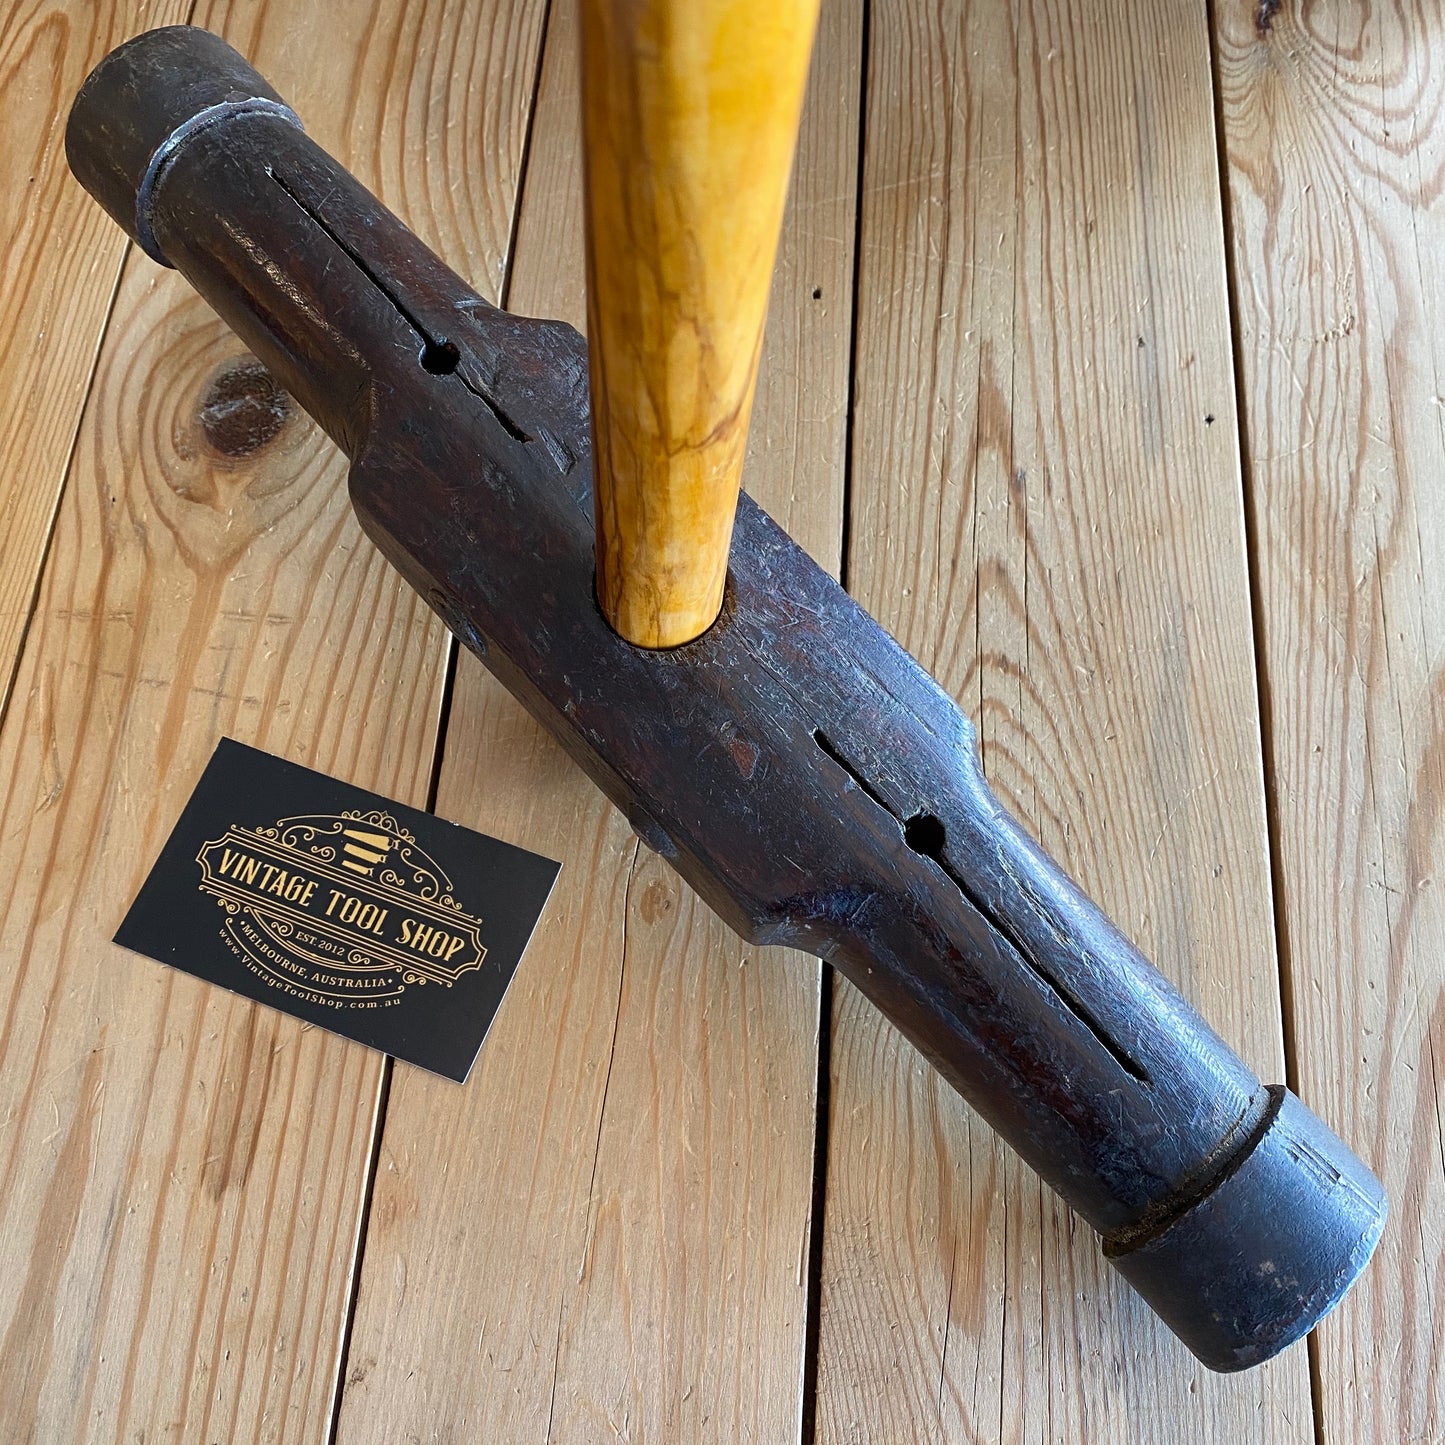 SOLD Antique CAULKING MALLET shipwright tool T5789